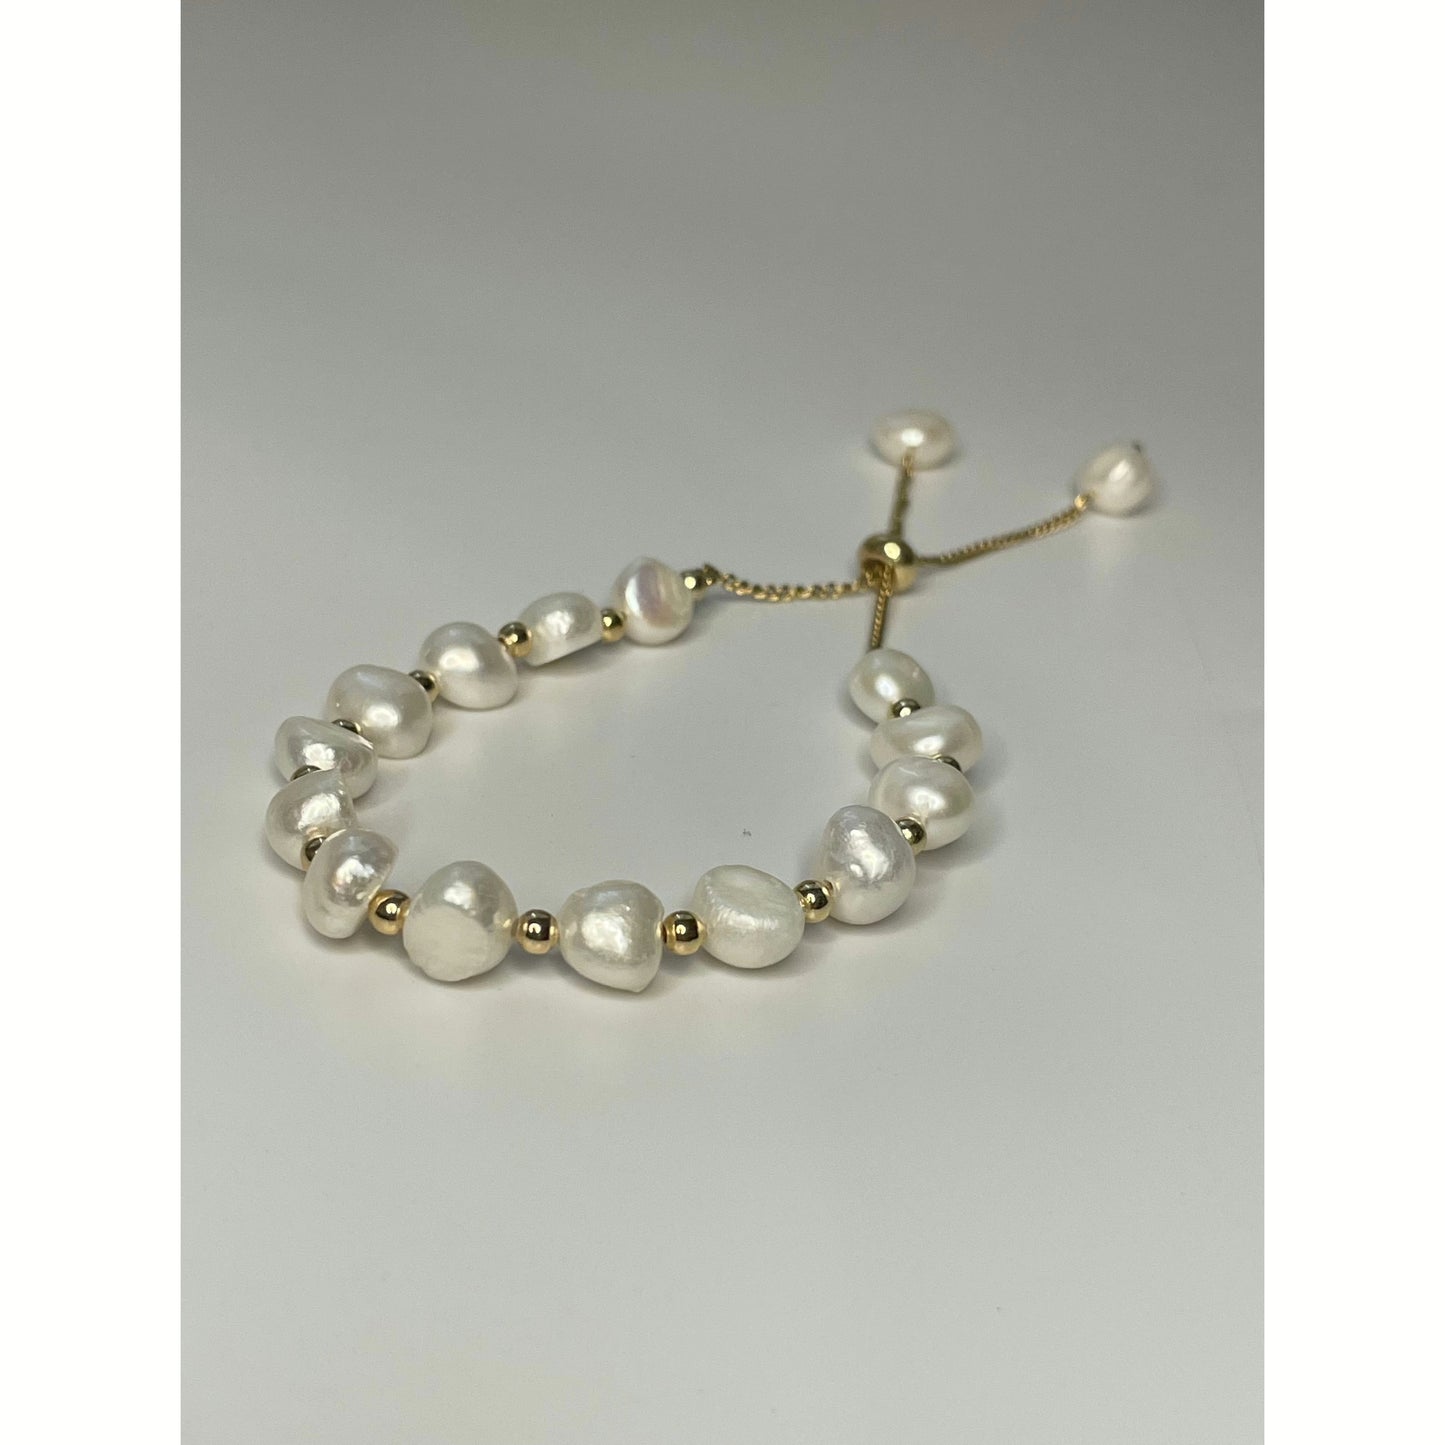 Polly pearl bracelet